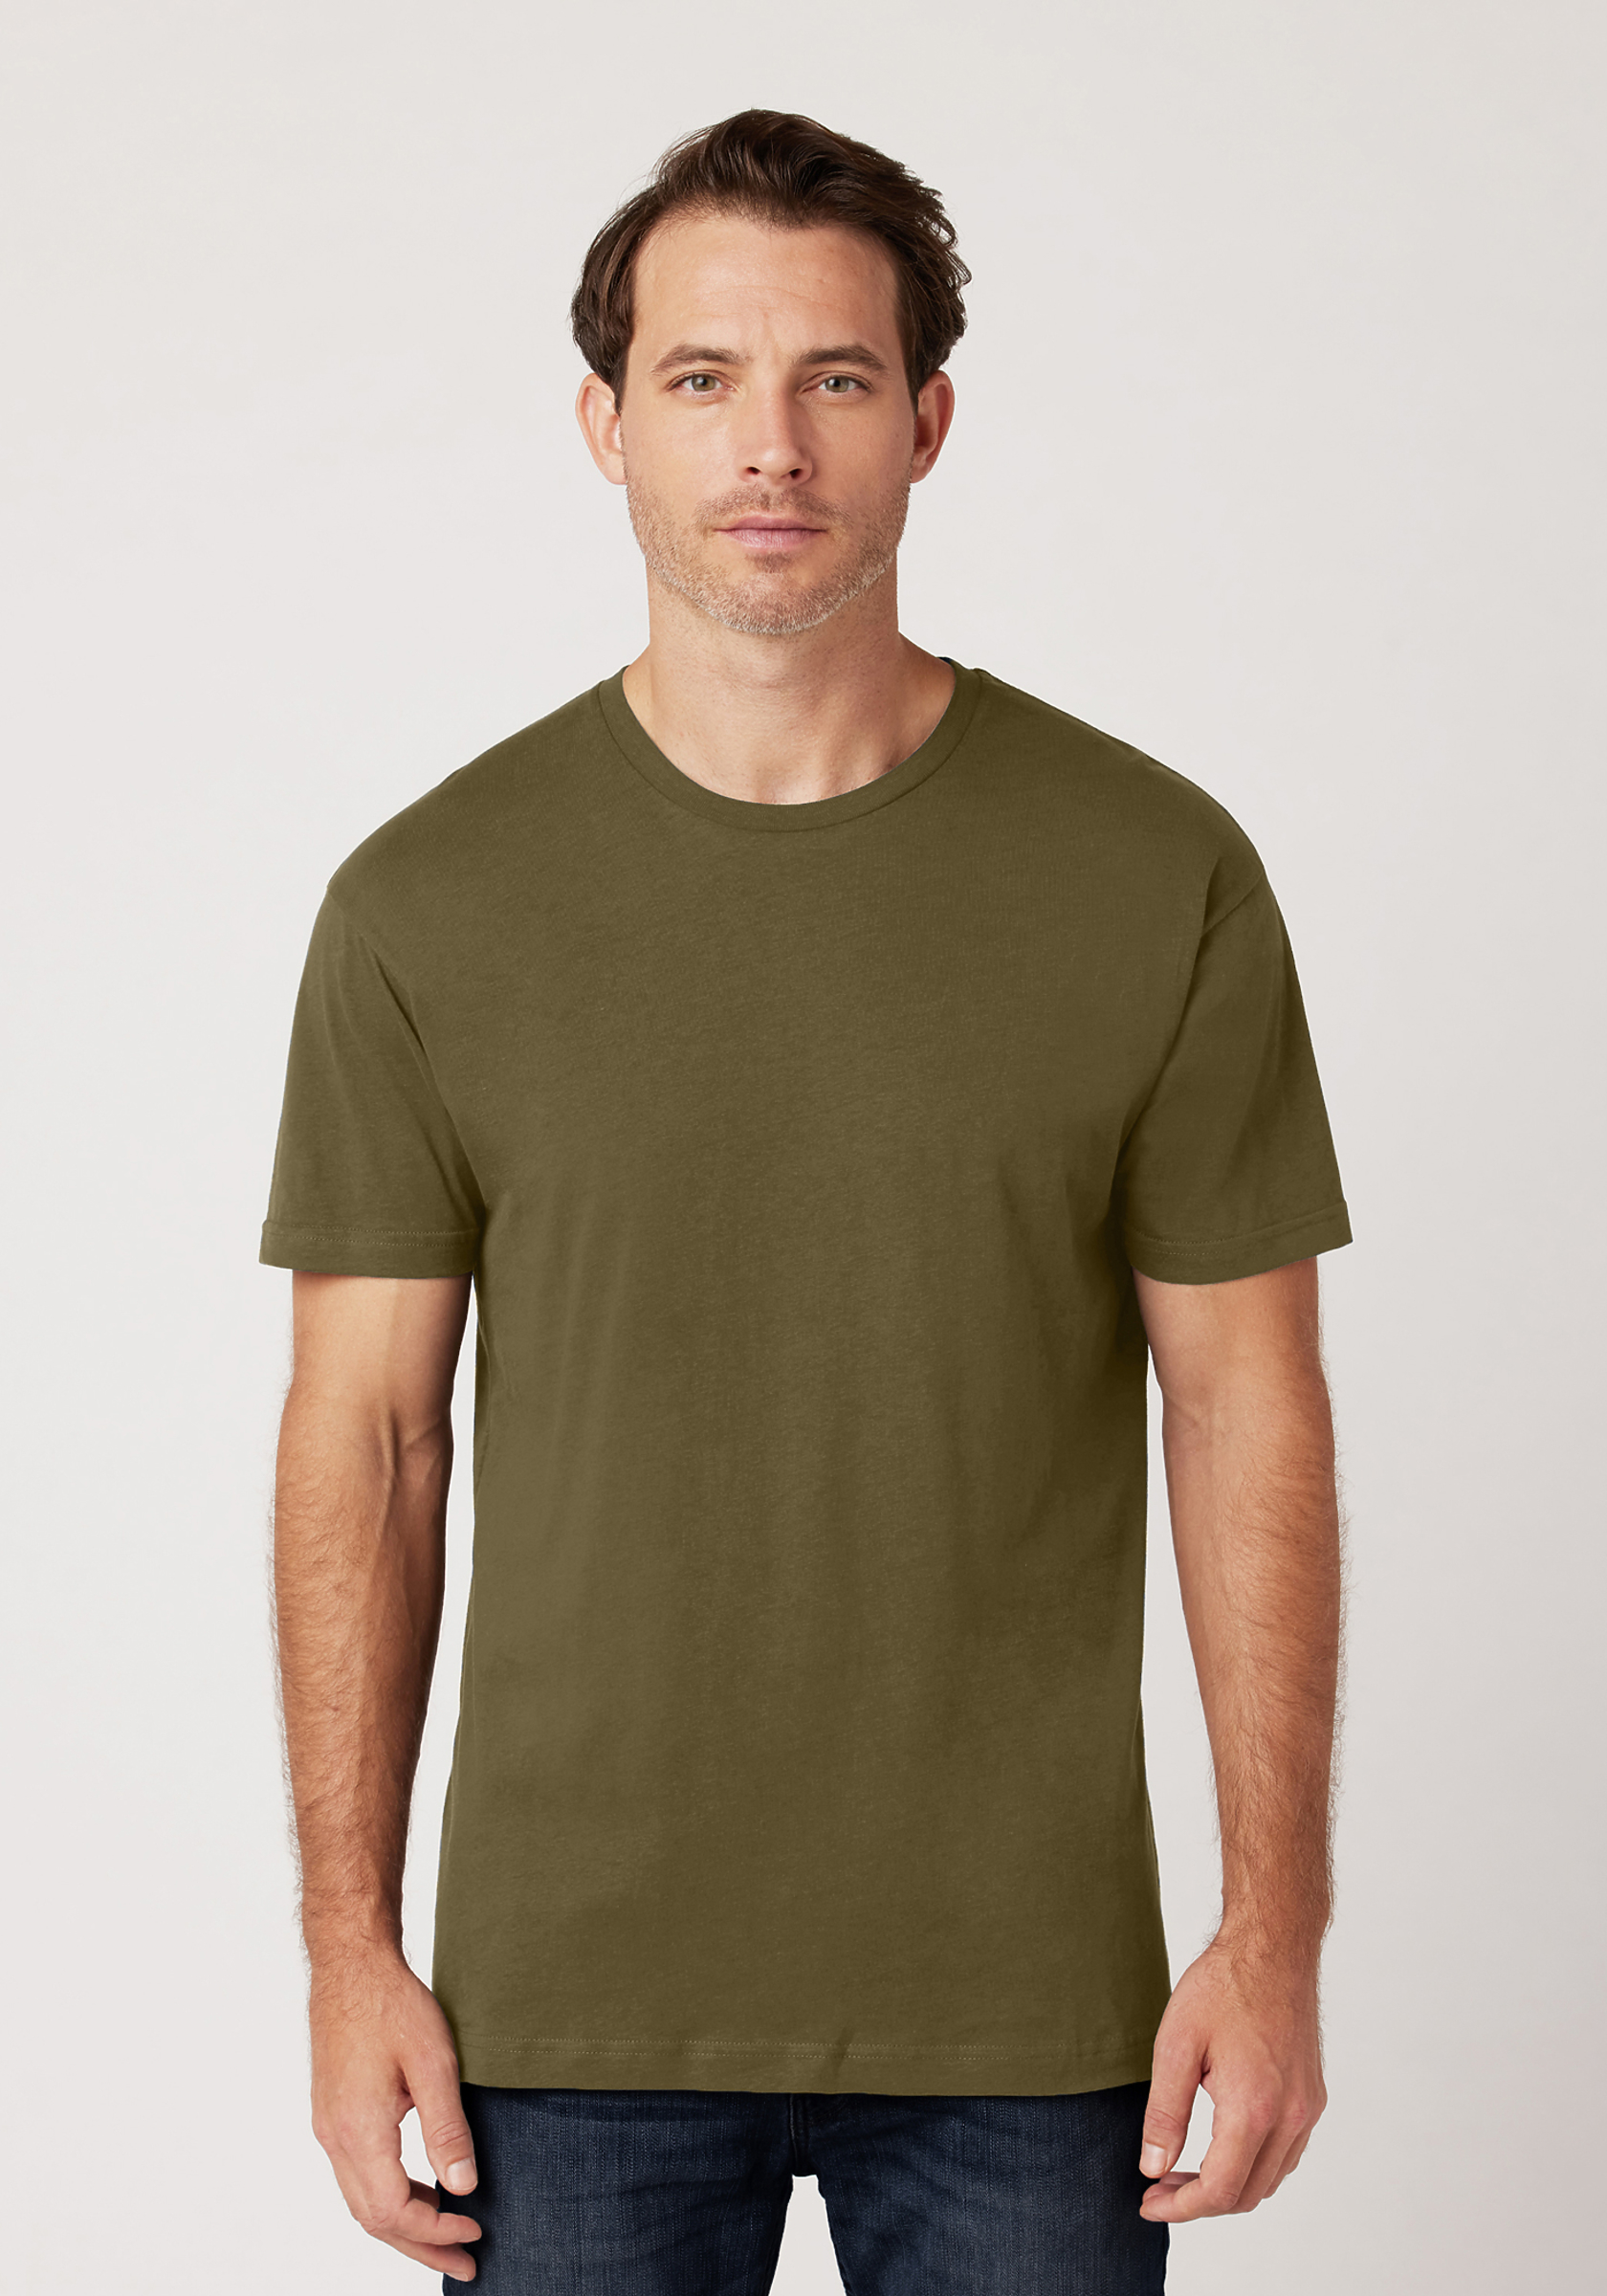 Ananiver parkere Læsbarhed Men's S/S Tubular T-Shirt | Cotton Heritage